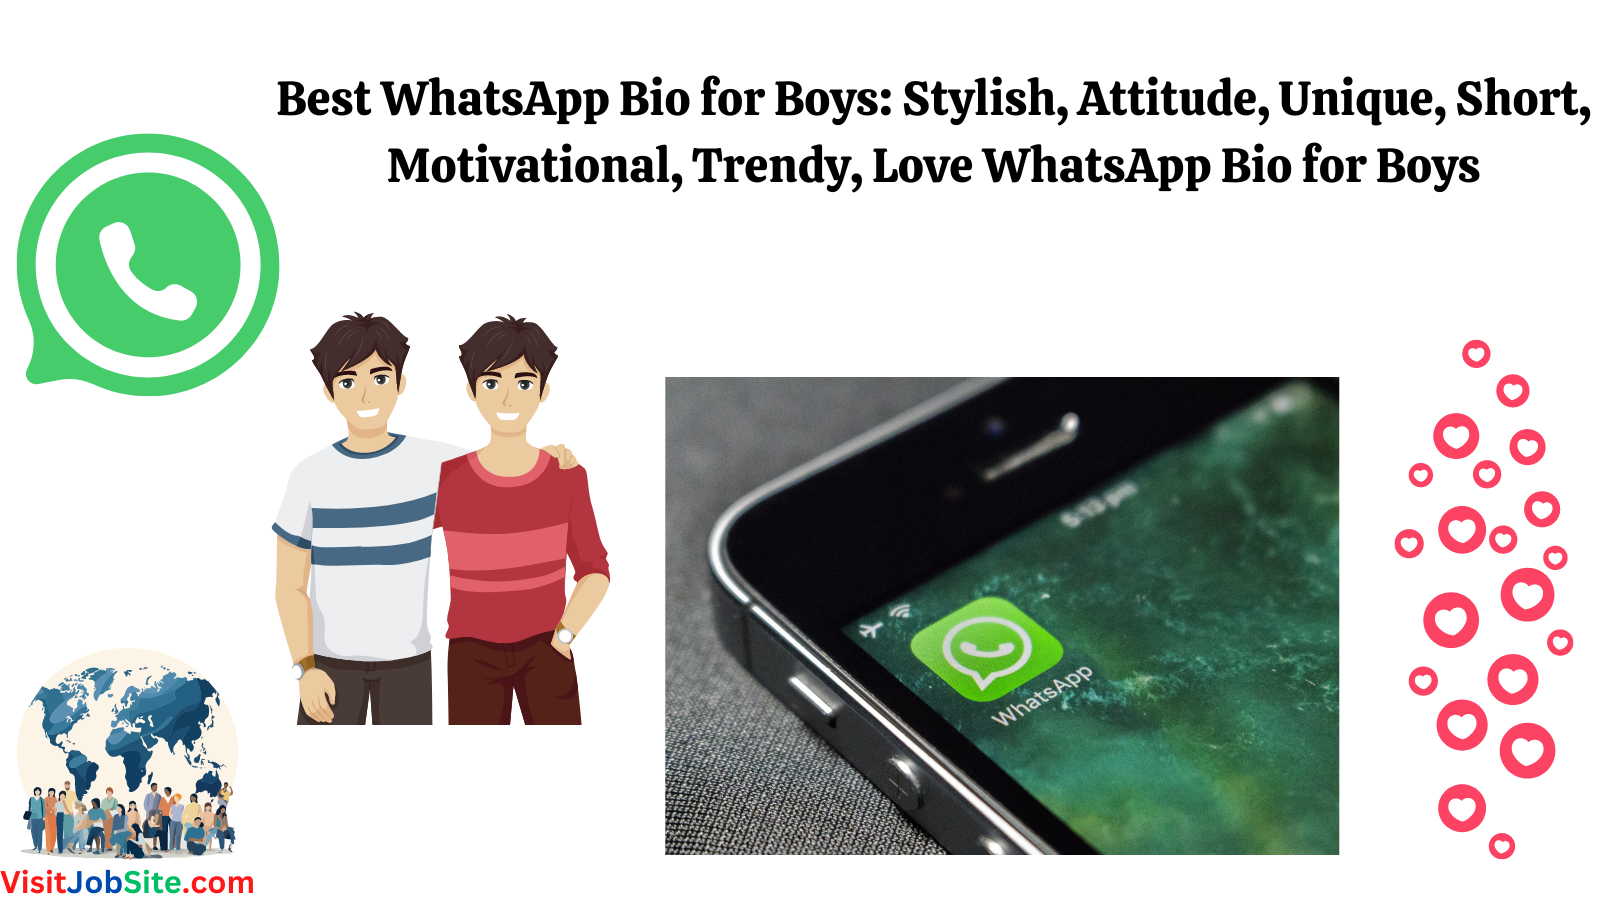 Best WhatsApp Bio for Boys Stylish, Attitude, Unique, Short, Motivational, Trendy, Love WhatsApp Bio for Boys